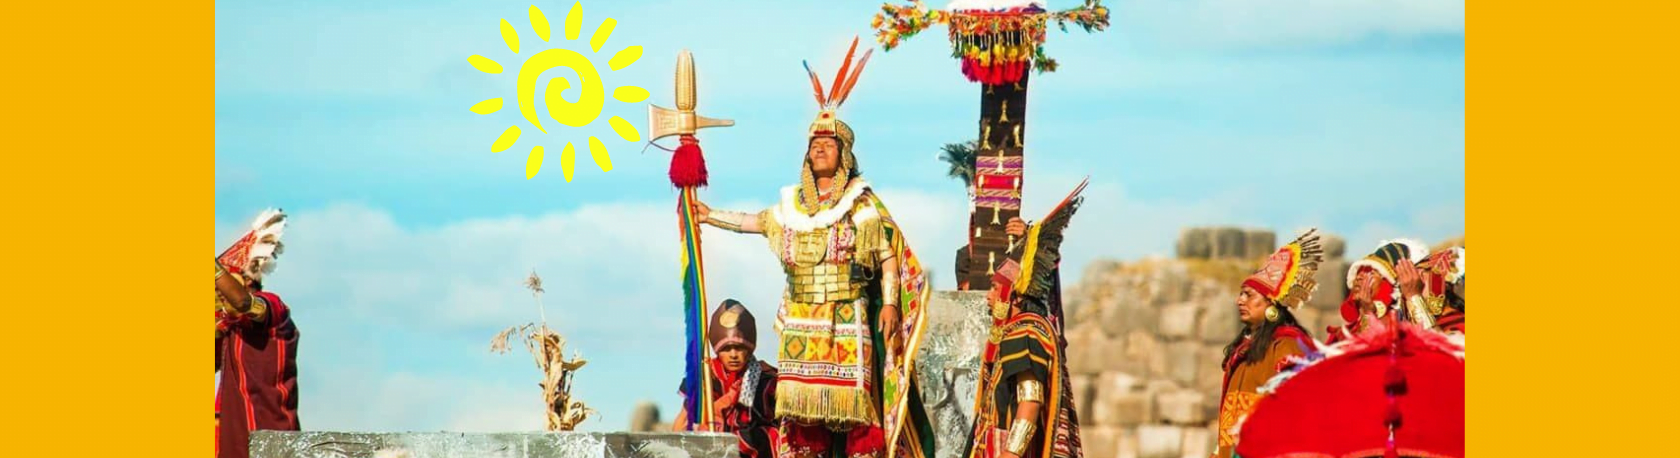 Easy Podcast: La fiesta del Inti Raymi - Easy Español